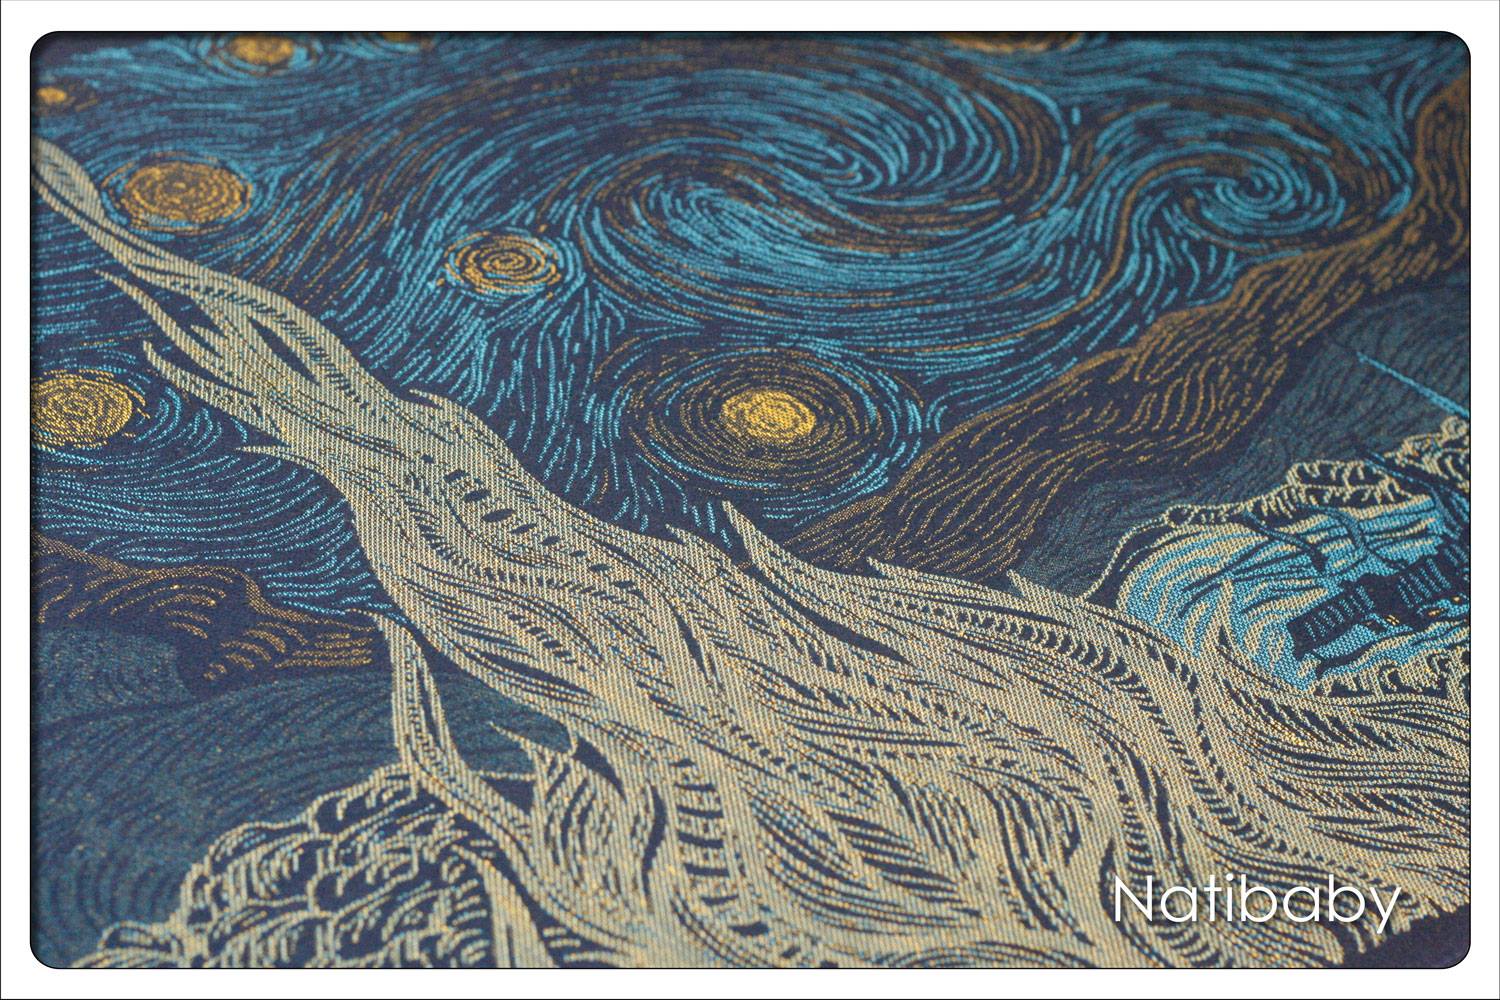 Natibaby Starry Night Wrap (hemp) Image